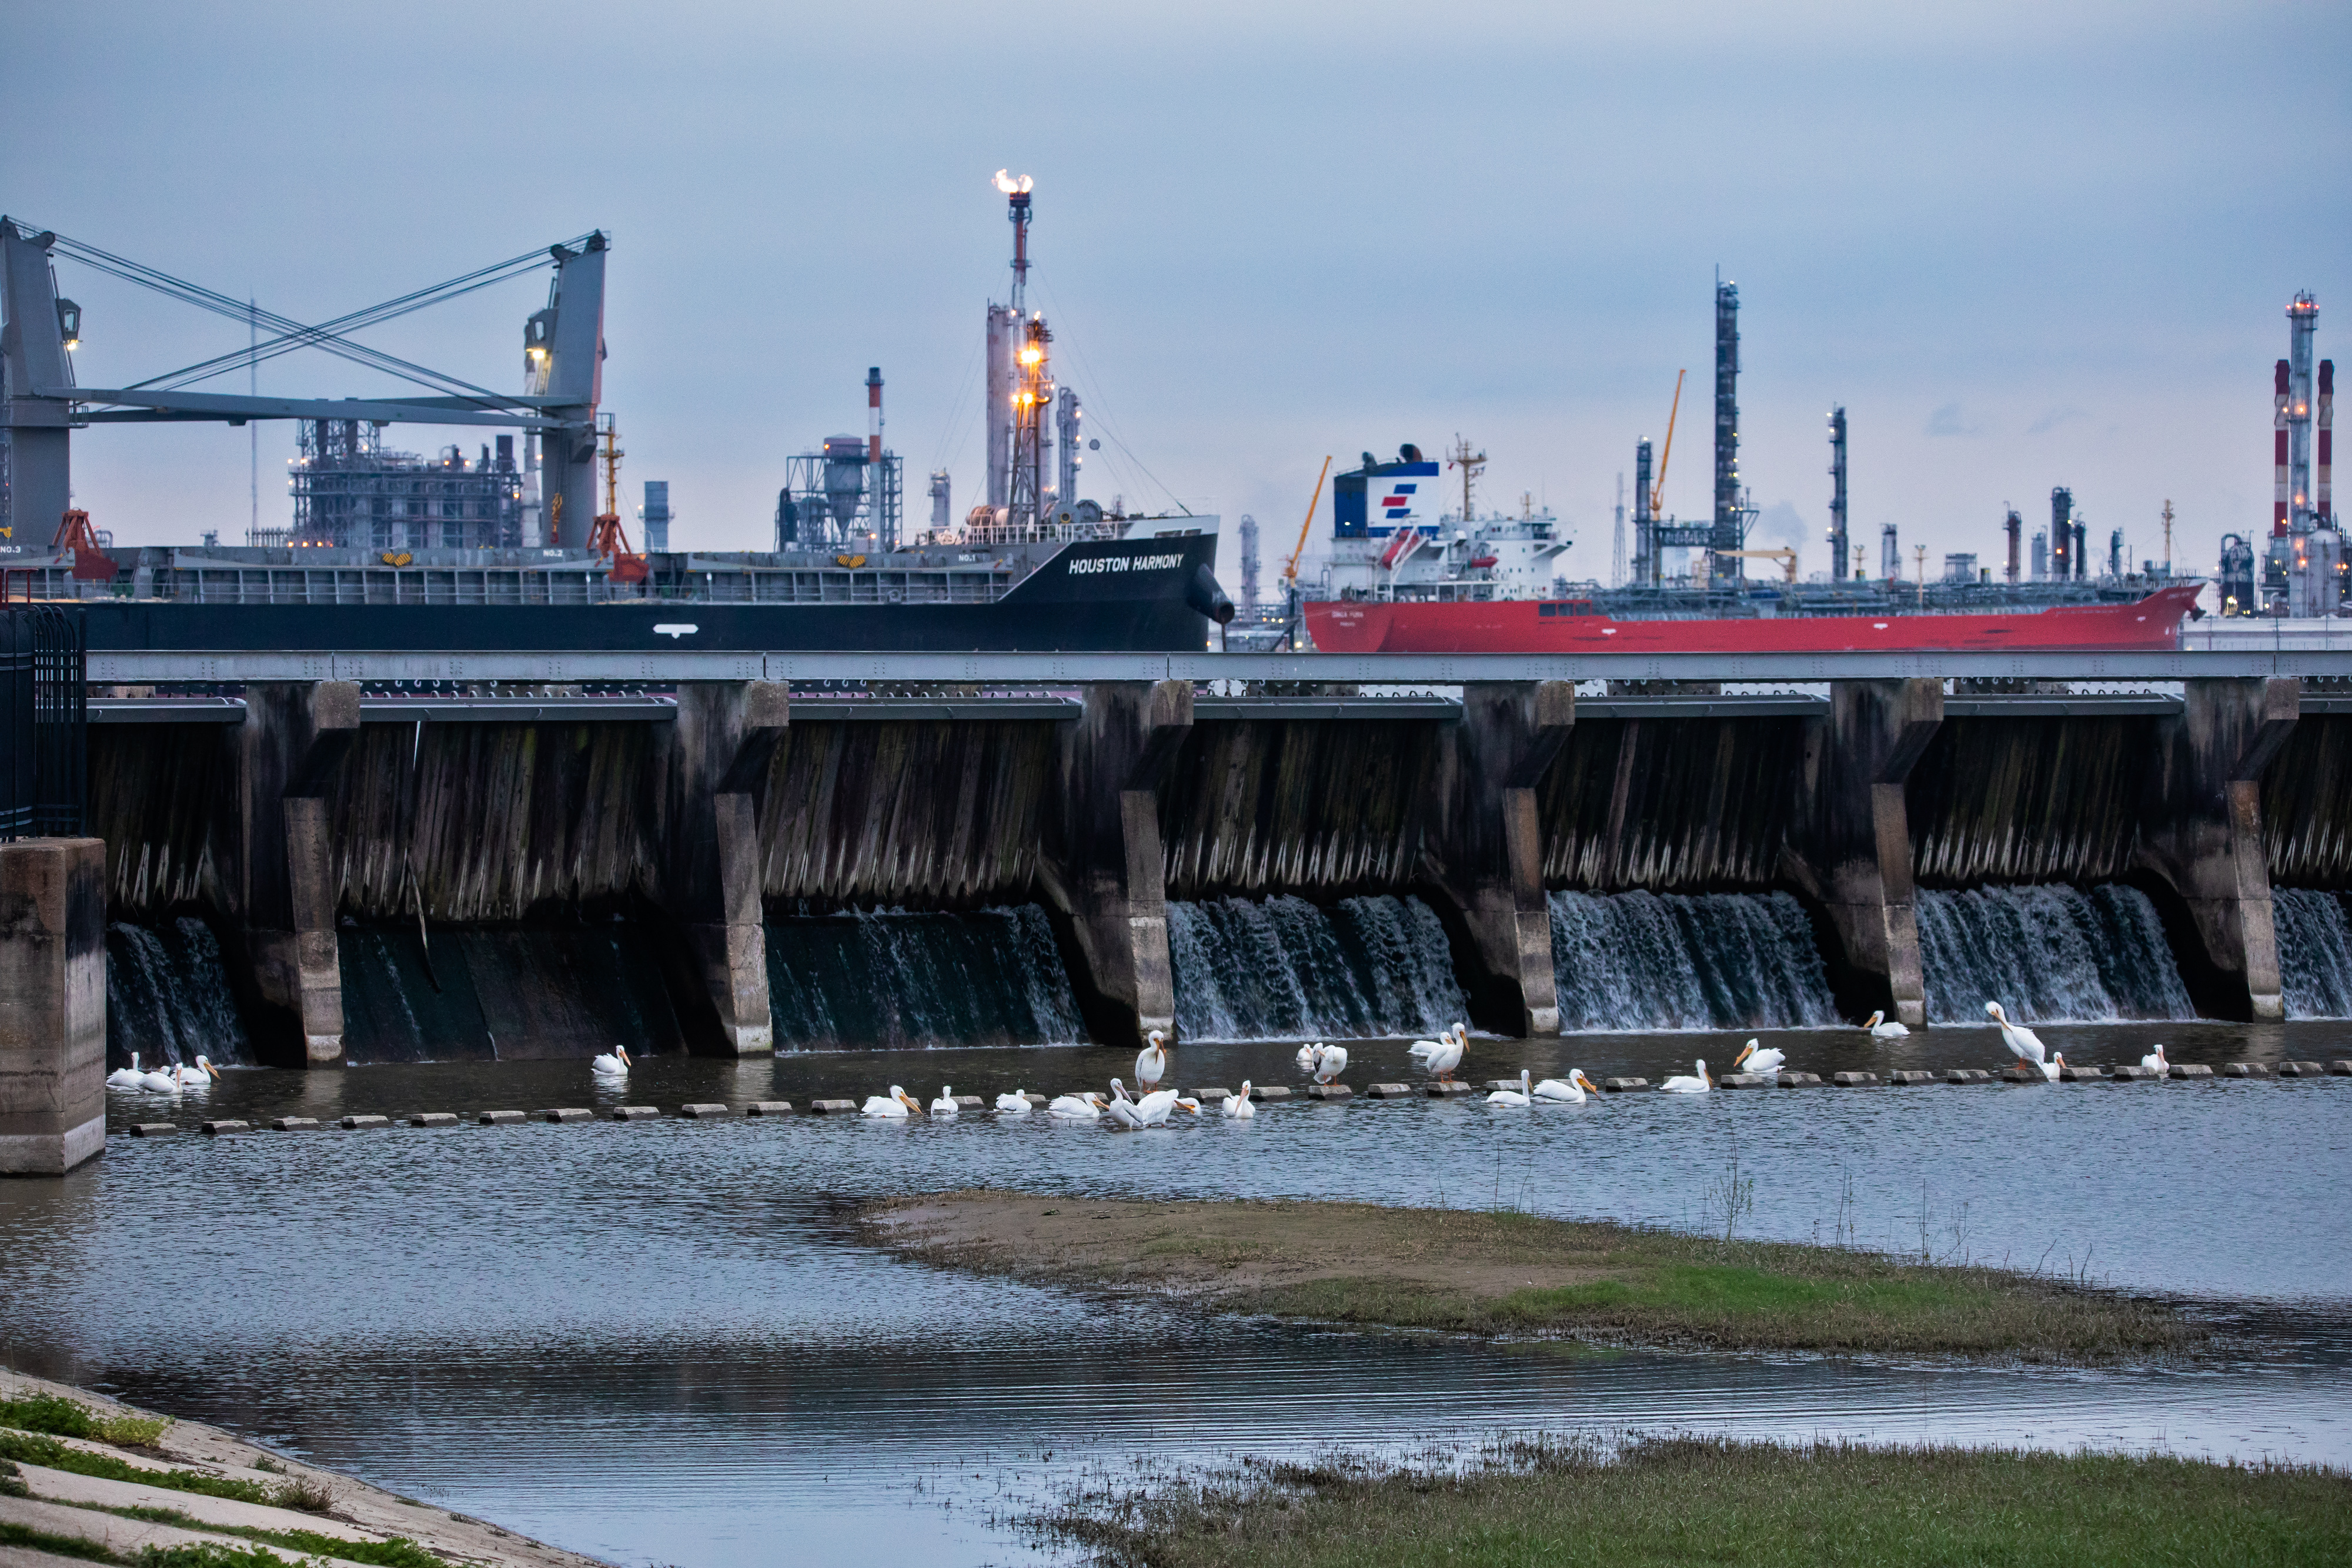 Spillway near Dow Chemical in Plaquemine, Louisiana - Photographer Julie Dermansky